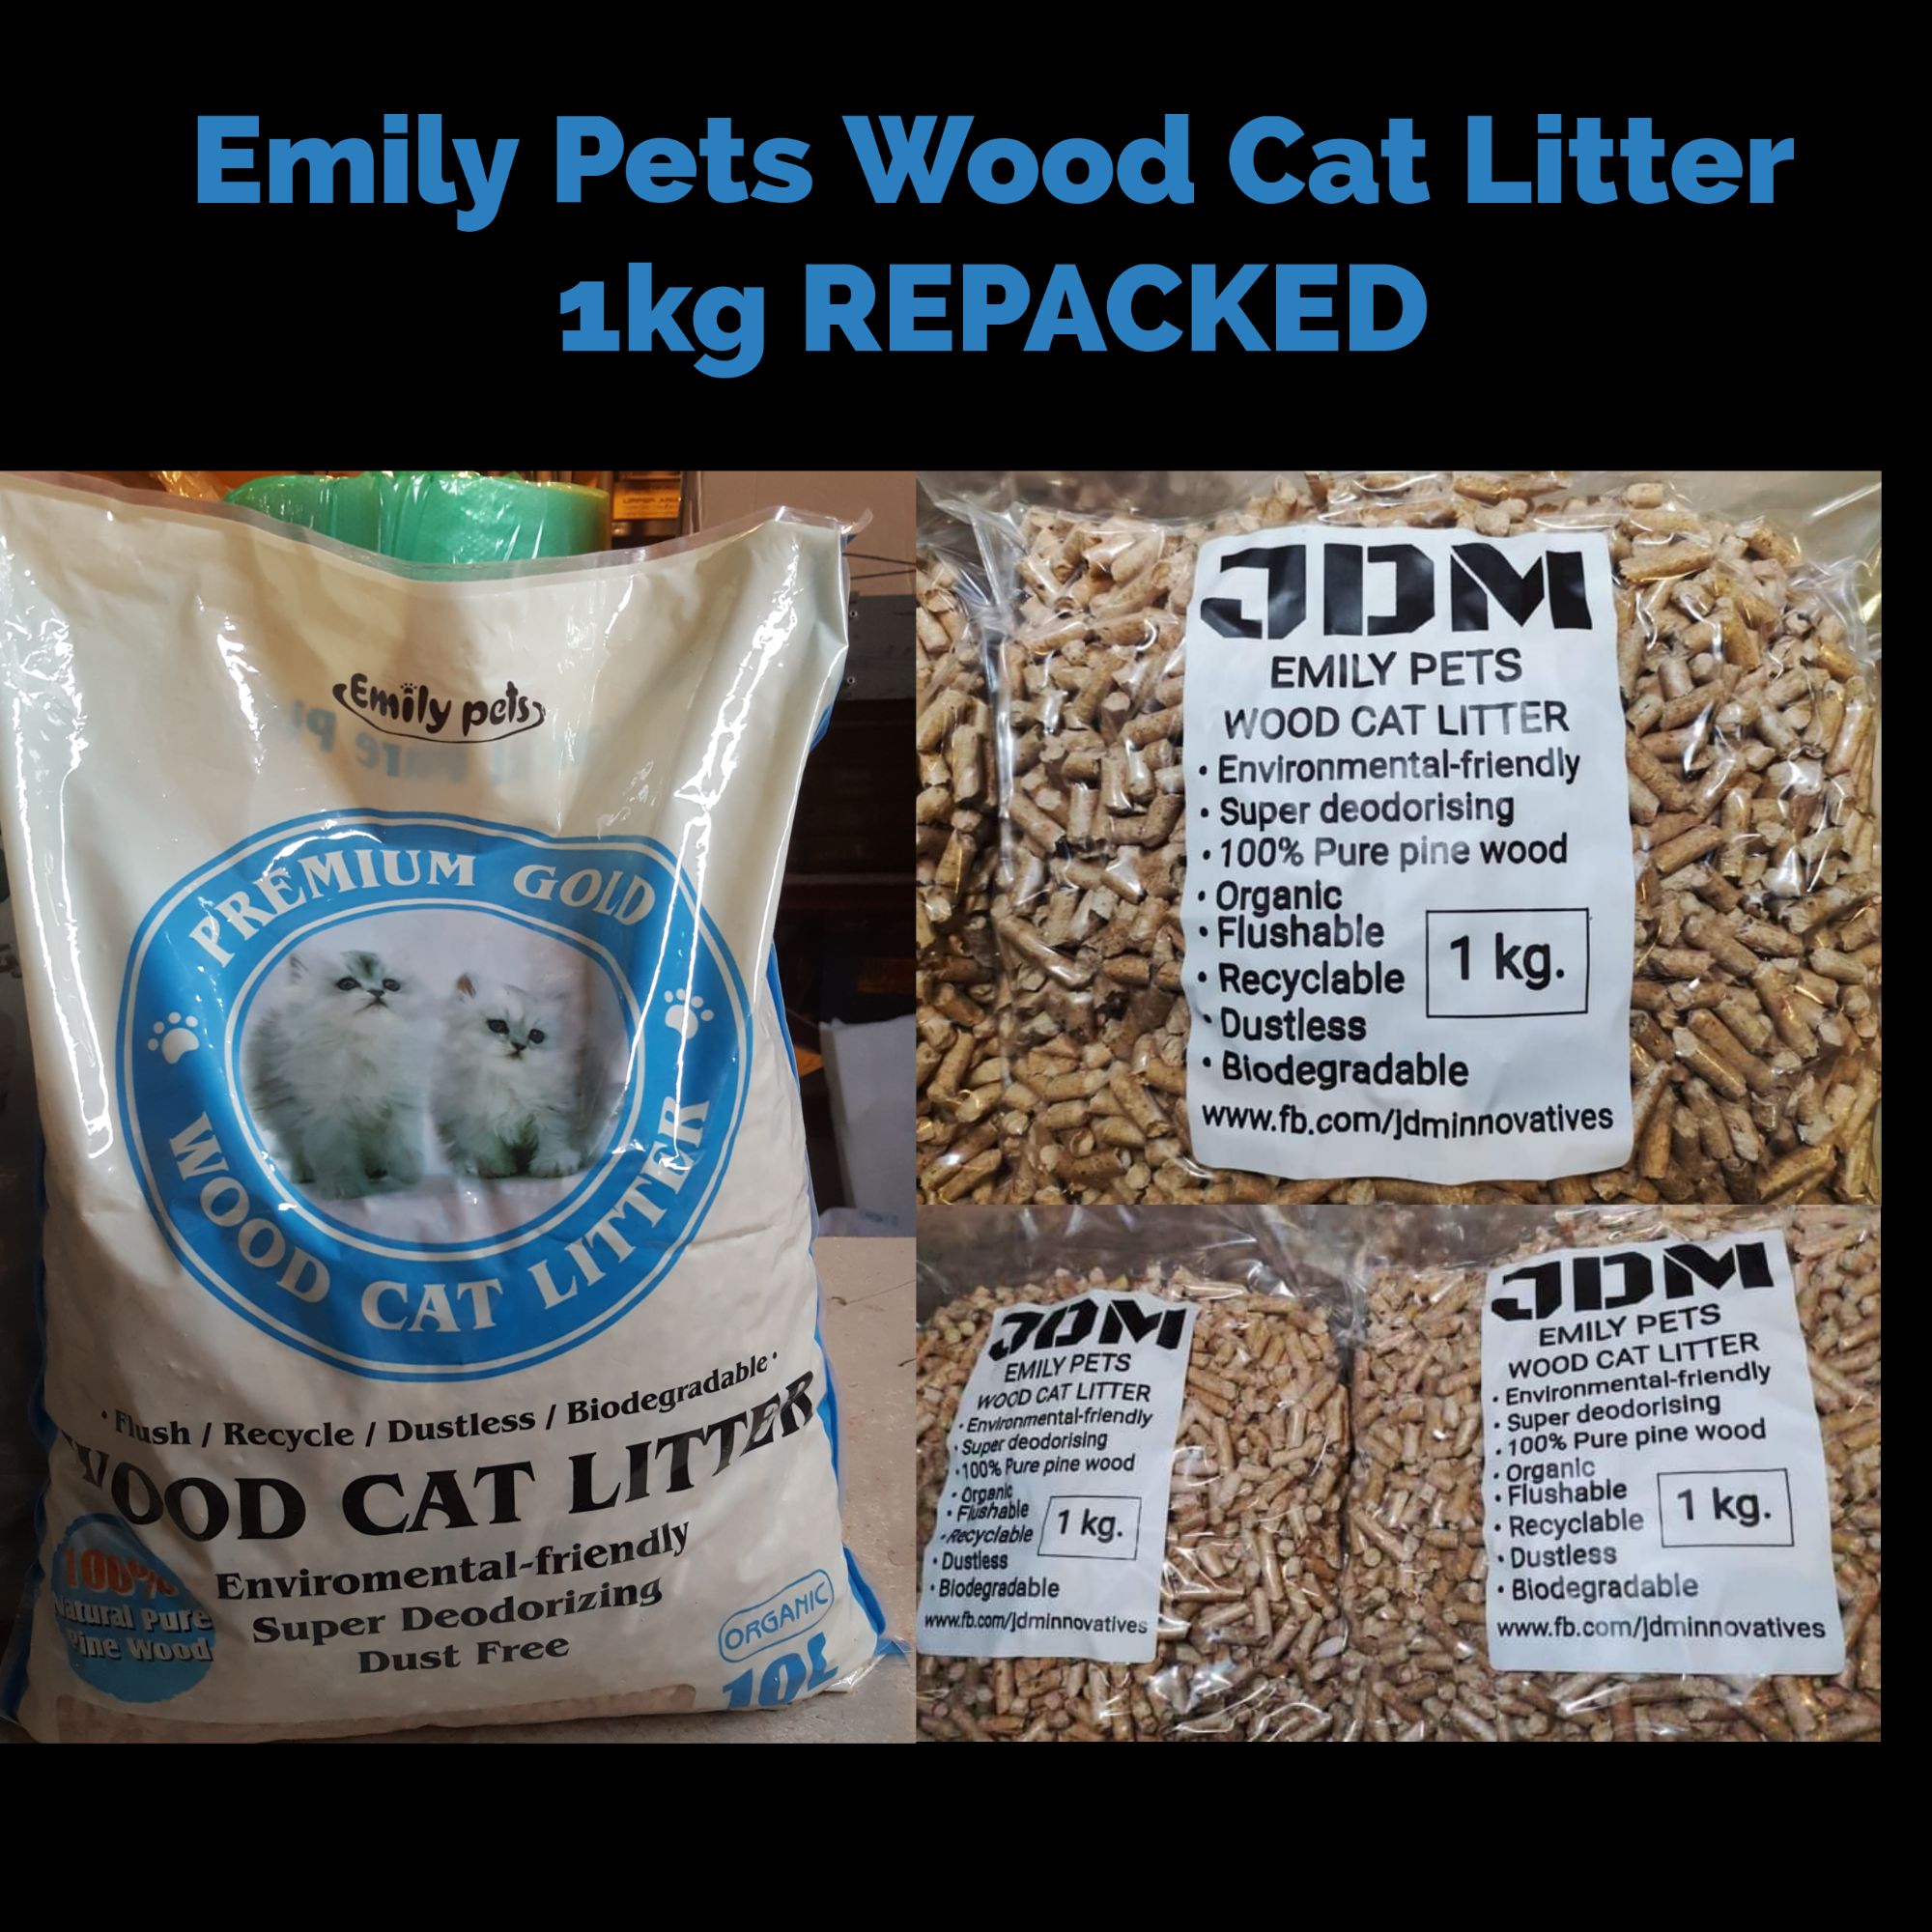 Emily Pets Wood Cat Litter 1kg REPACK / pine wood pellet